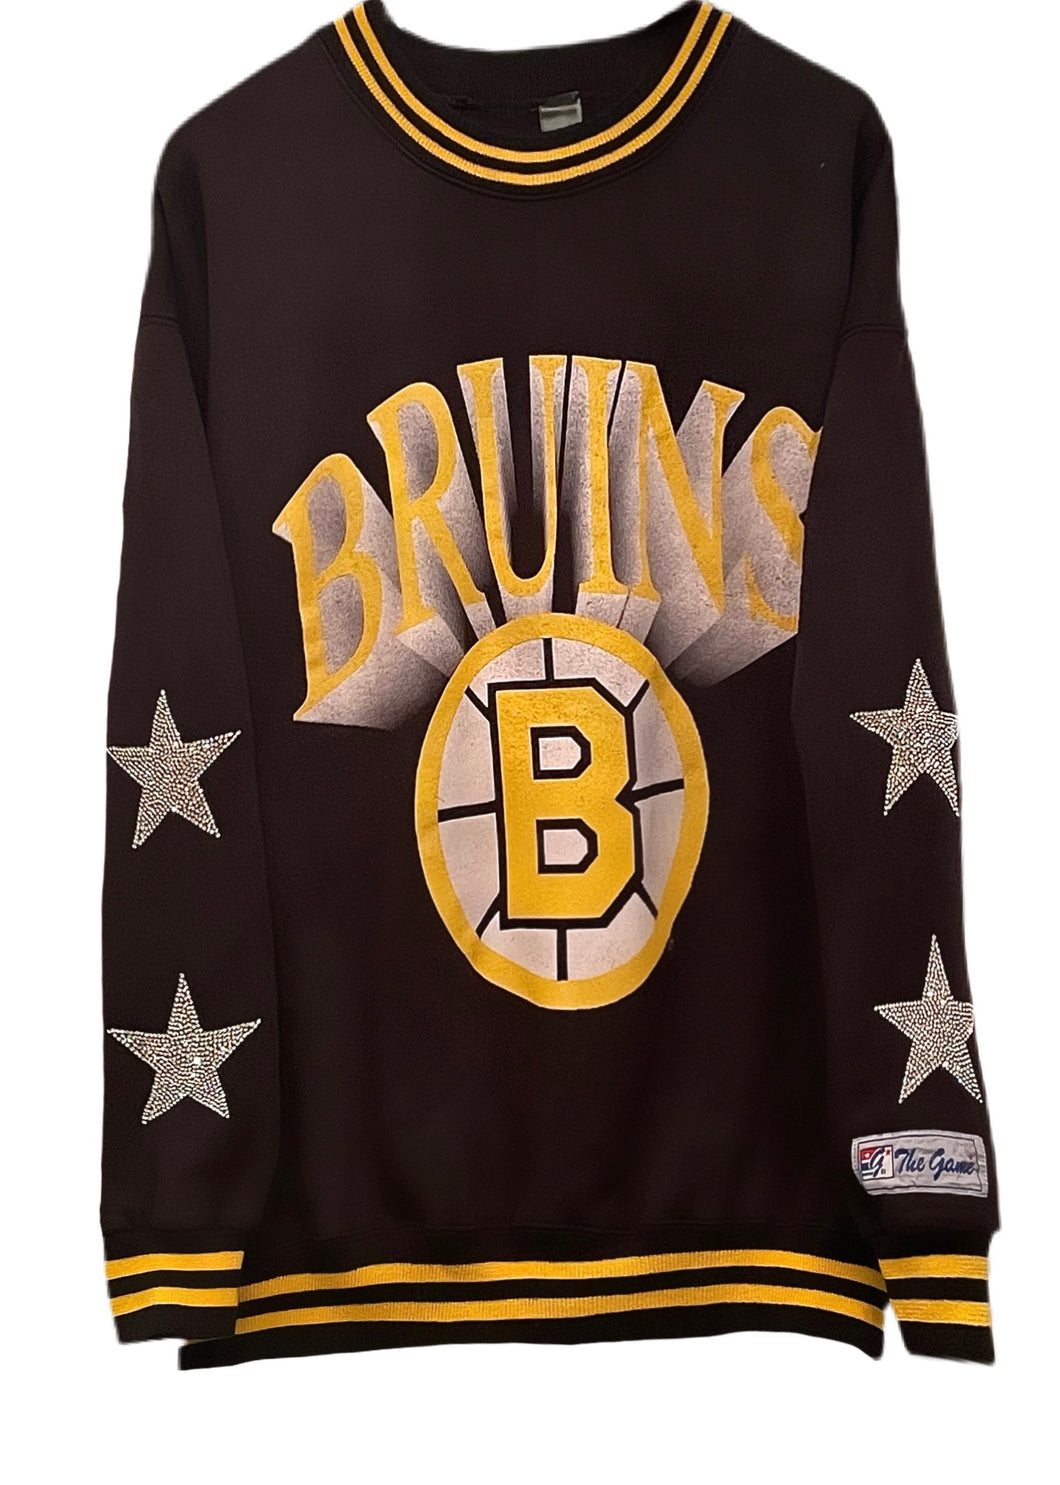 Best Selling Product] Customize Vintage NHL Boston Bruins Hockey